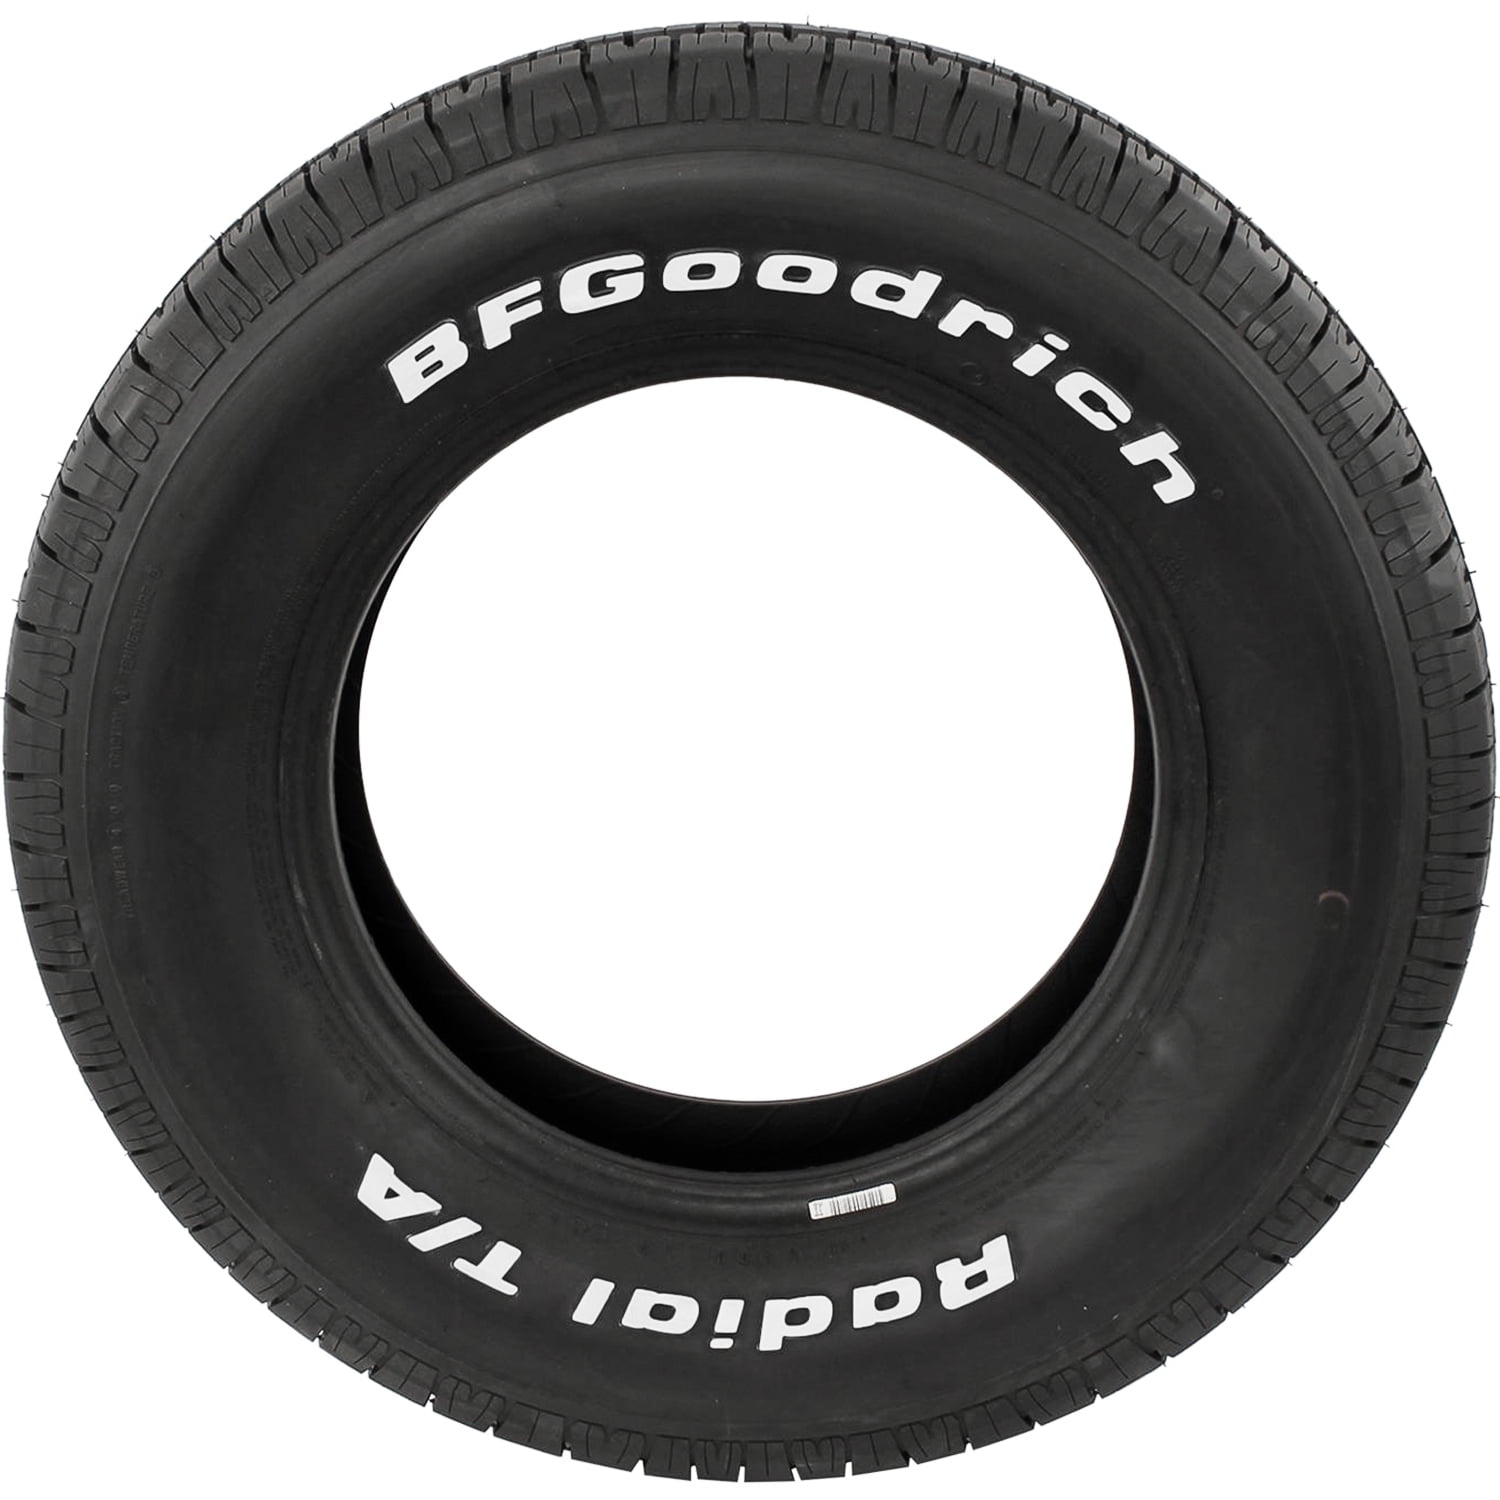 BFGoodrich Radial T/A All Season P225/60R14 94S Passenger Tire